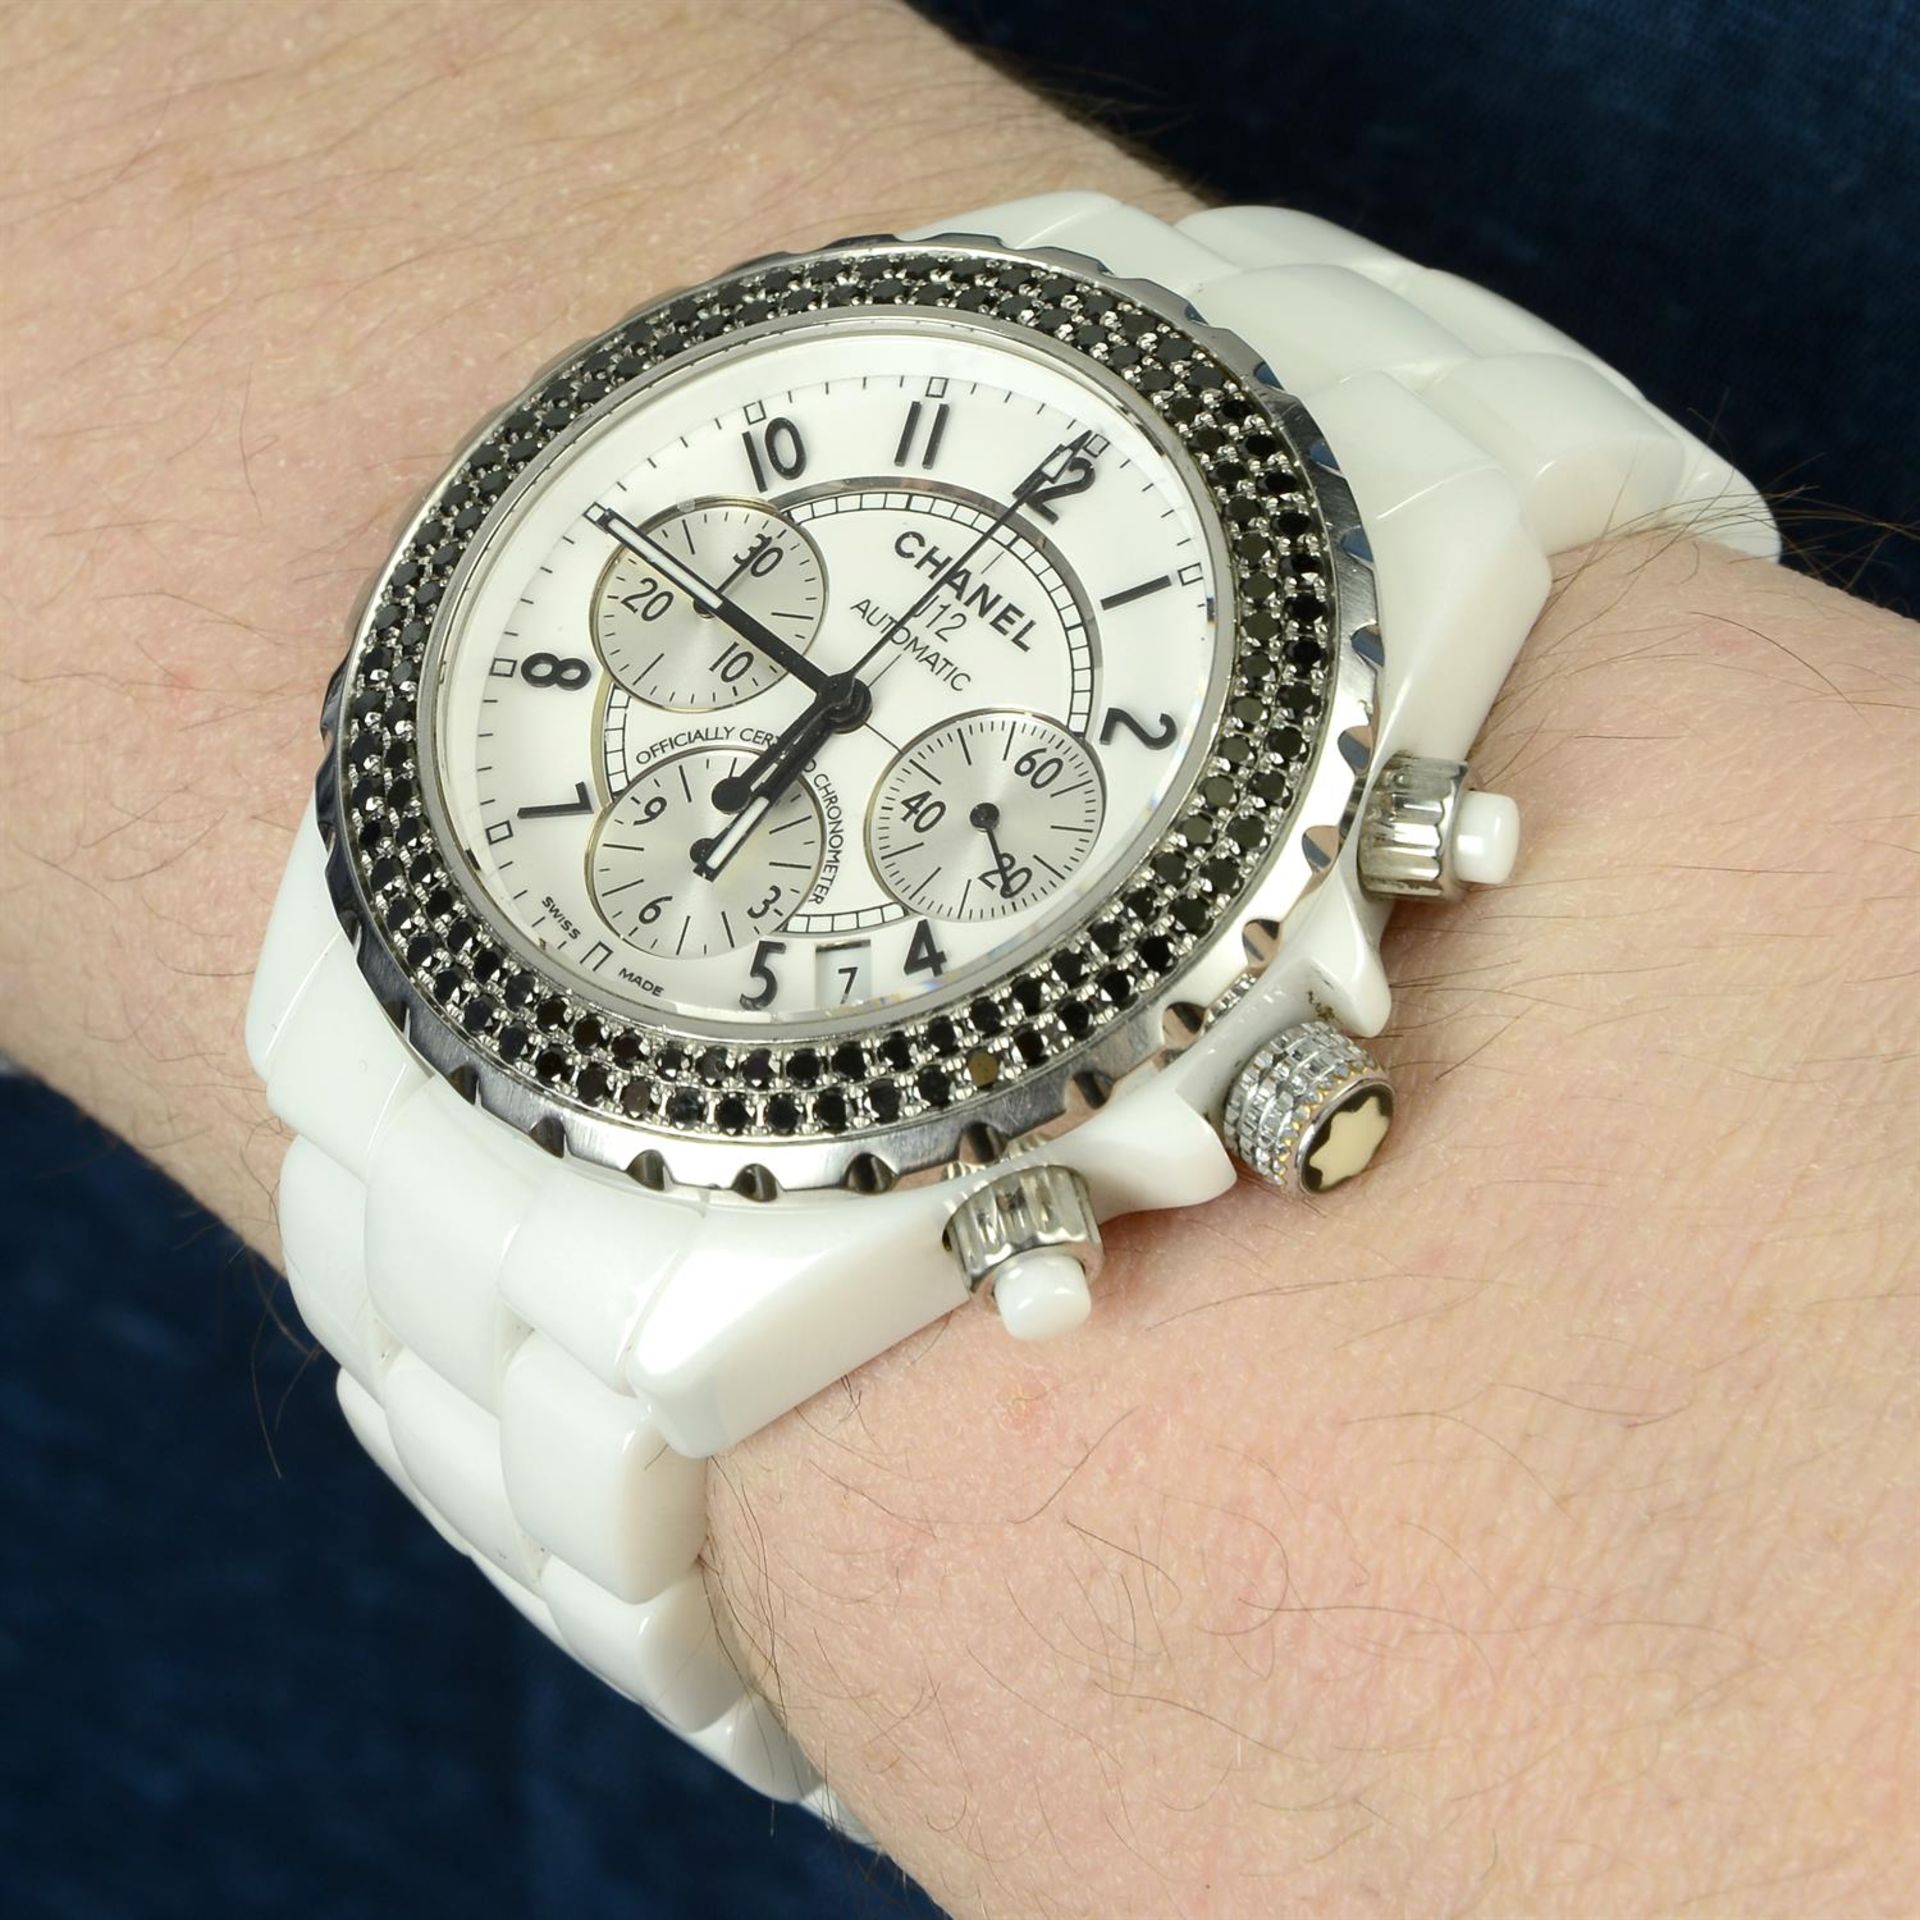 CHANEL - a ceramic J12 chronograph bracelet watch, 41mm. - Image 5 of 5